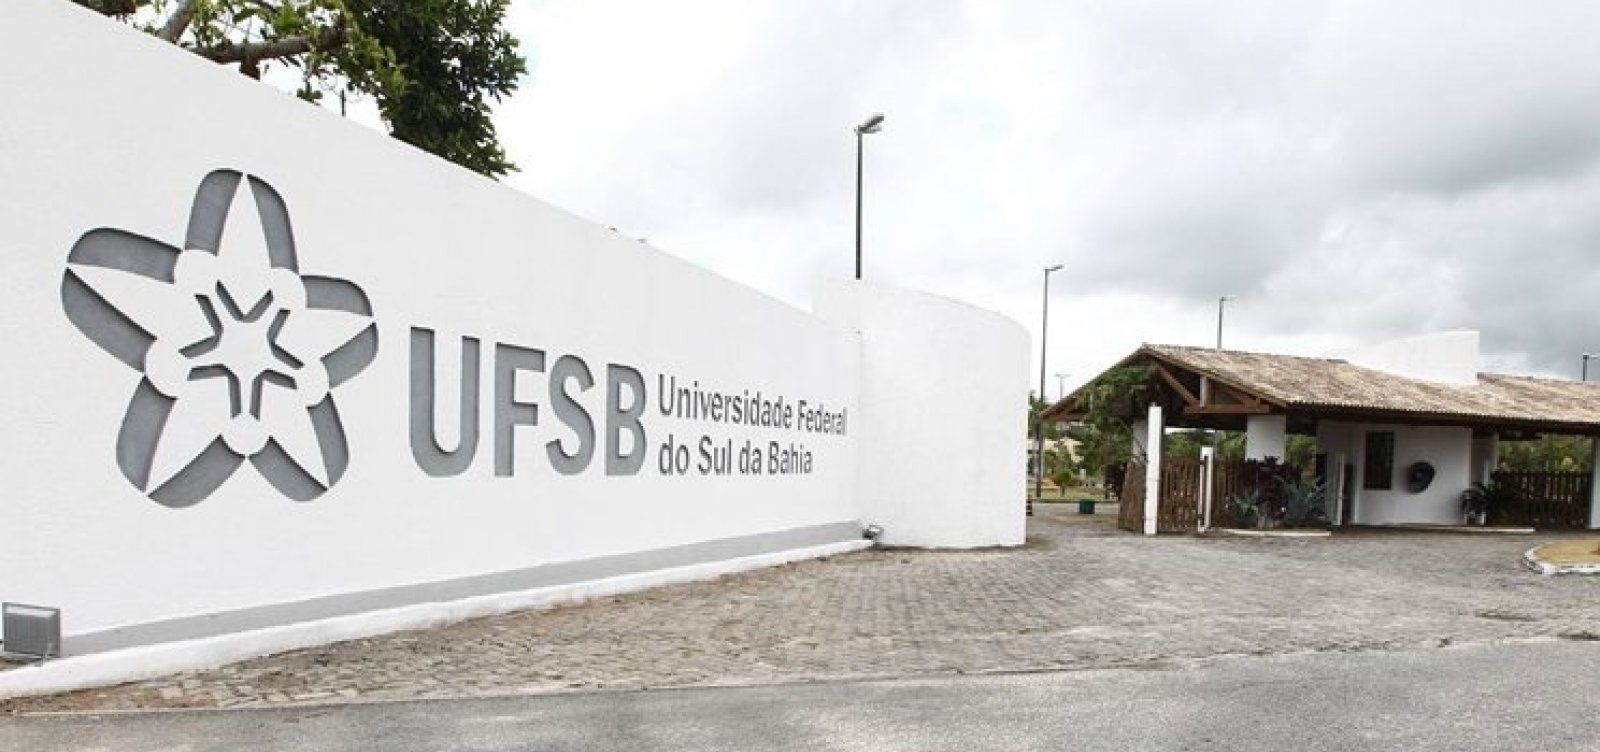 Após contingenciamento, UFSB desliga ar-condicionados e suspende compra de itens de limpeza